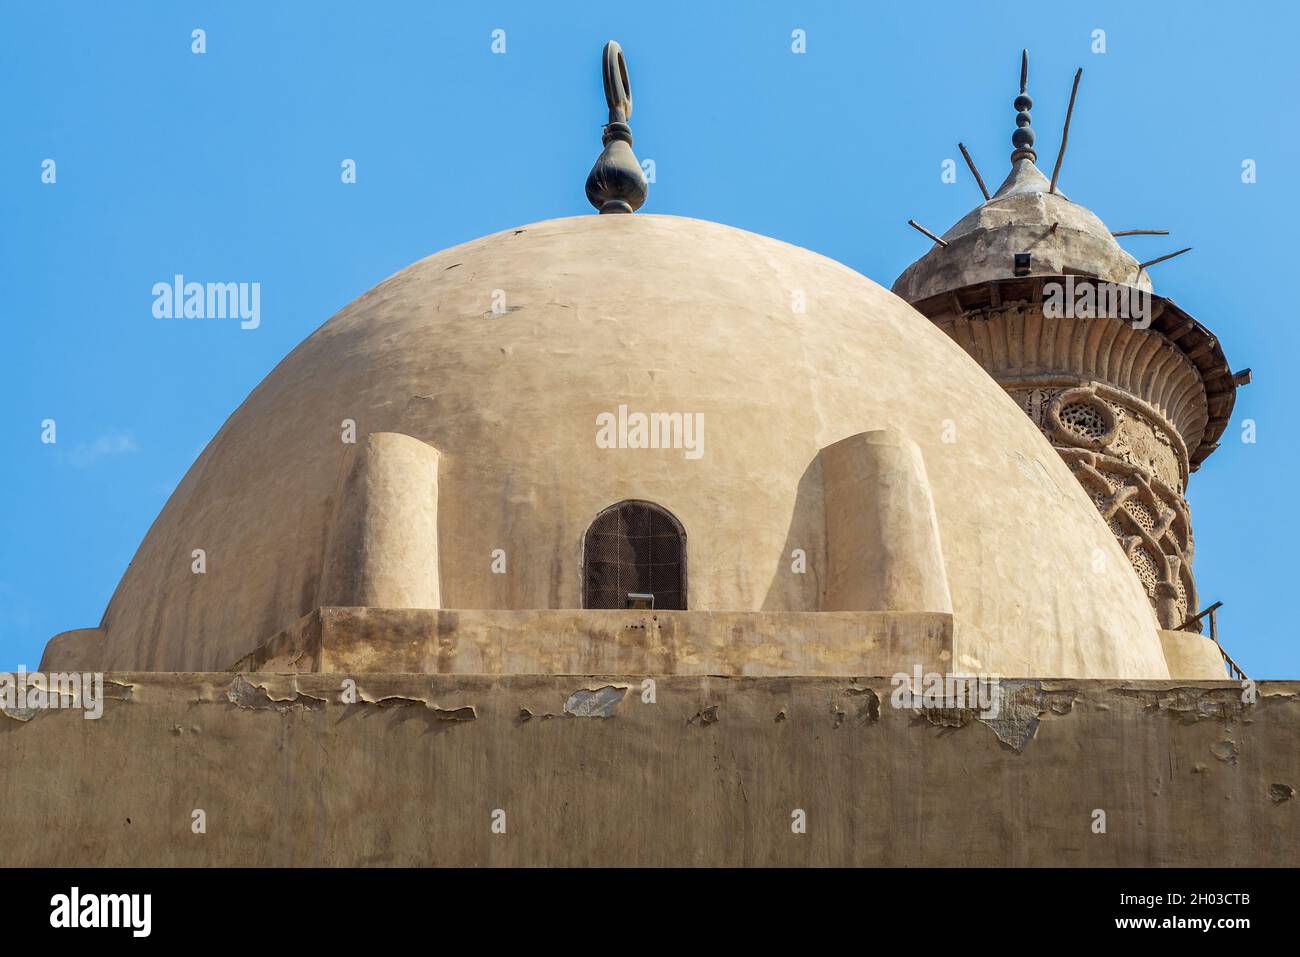 Dome at public historic mosque of Sultan Al Nassir Qalawun revealing minaret of Mamluk era El Zaher Barquq Mosque, Moez Street, Cairo, Egypt Stock Photo